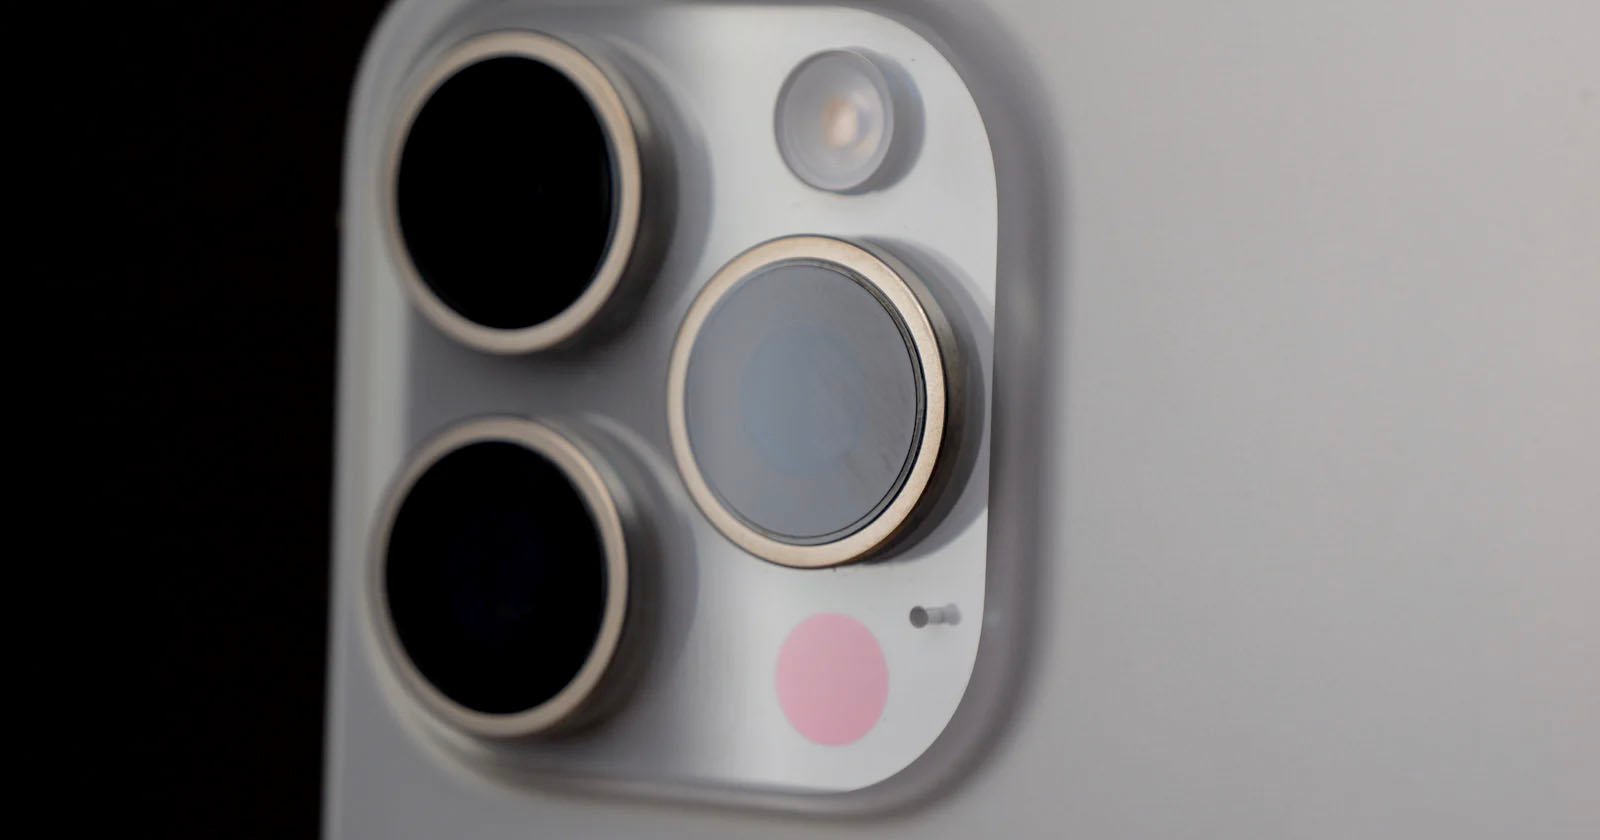  apple wants take camera sensor design in-house report 